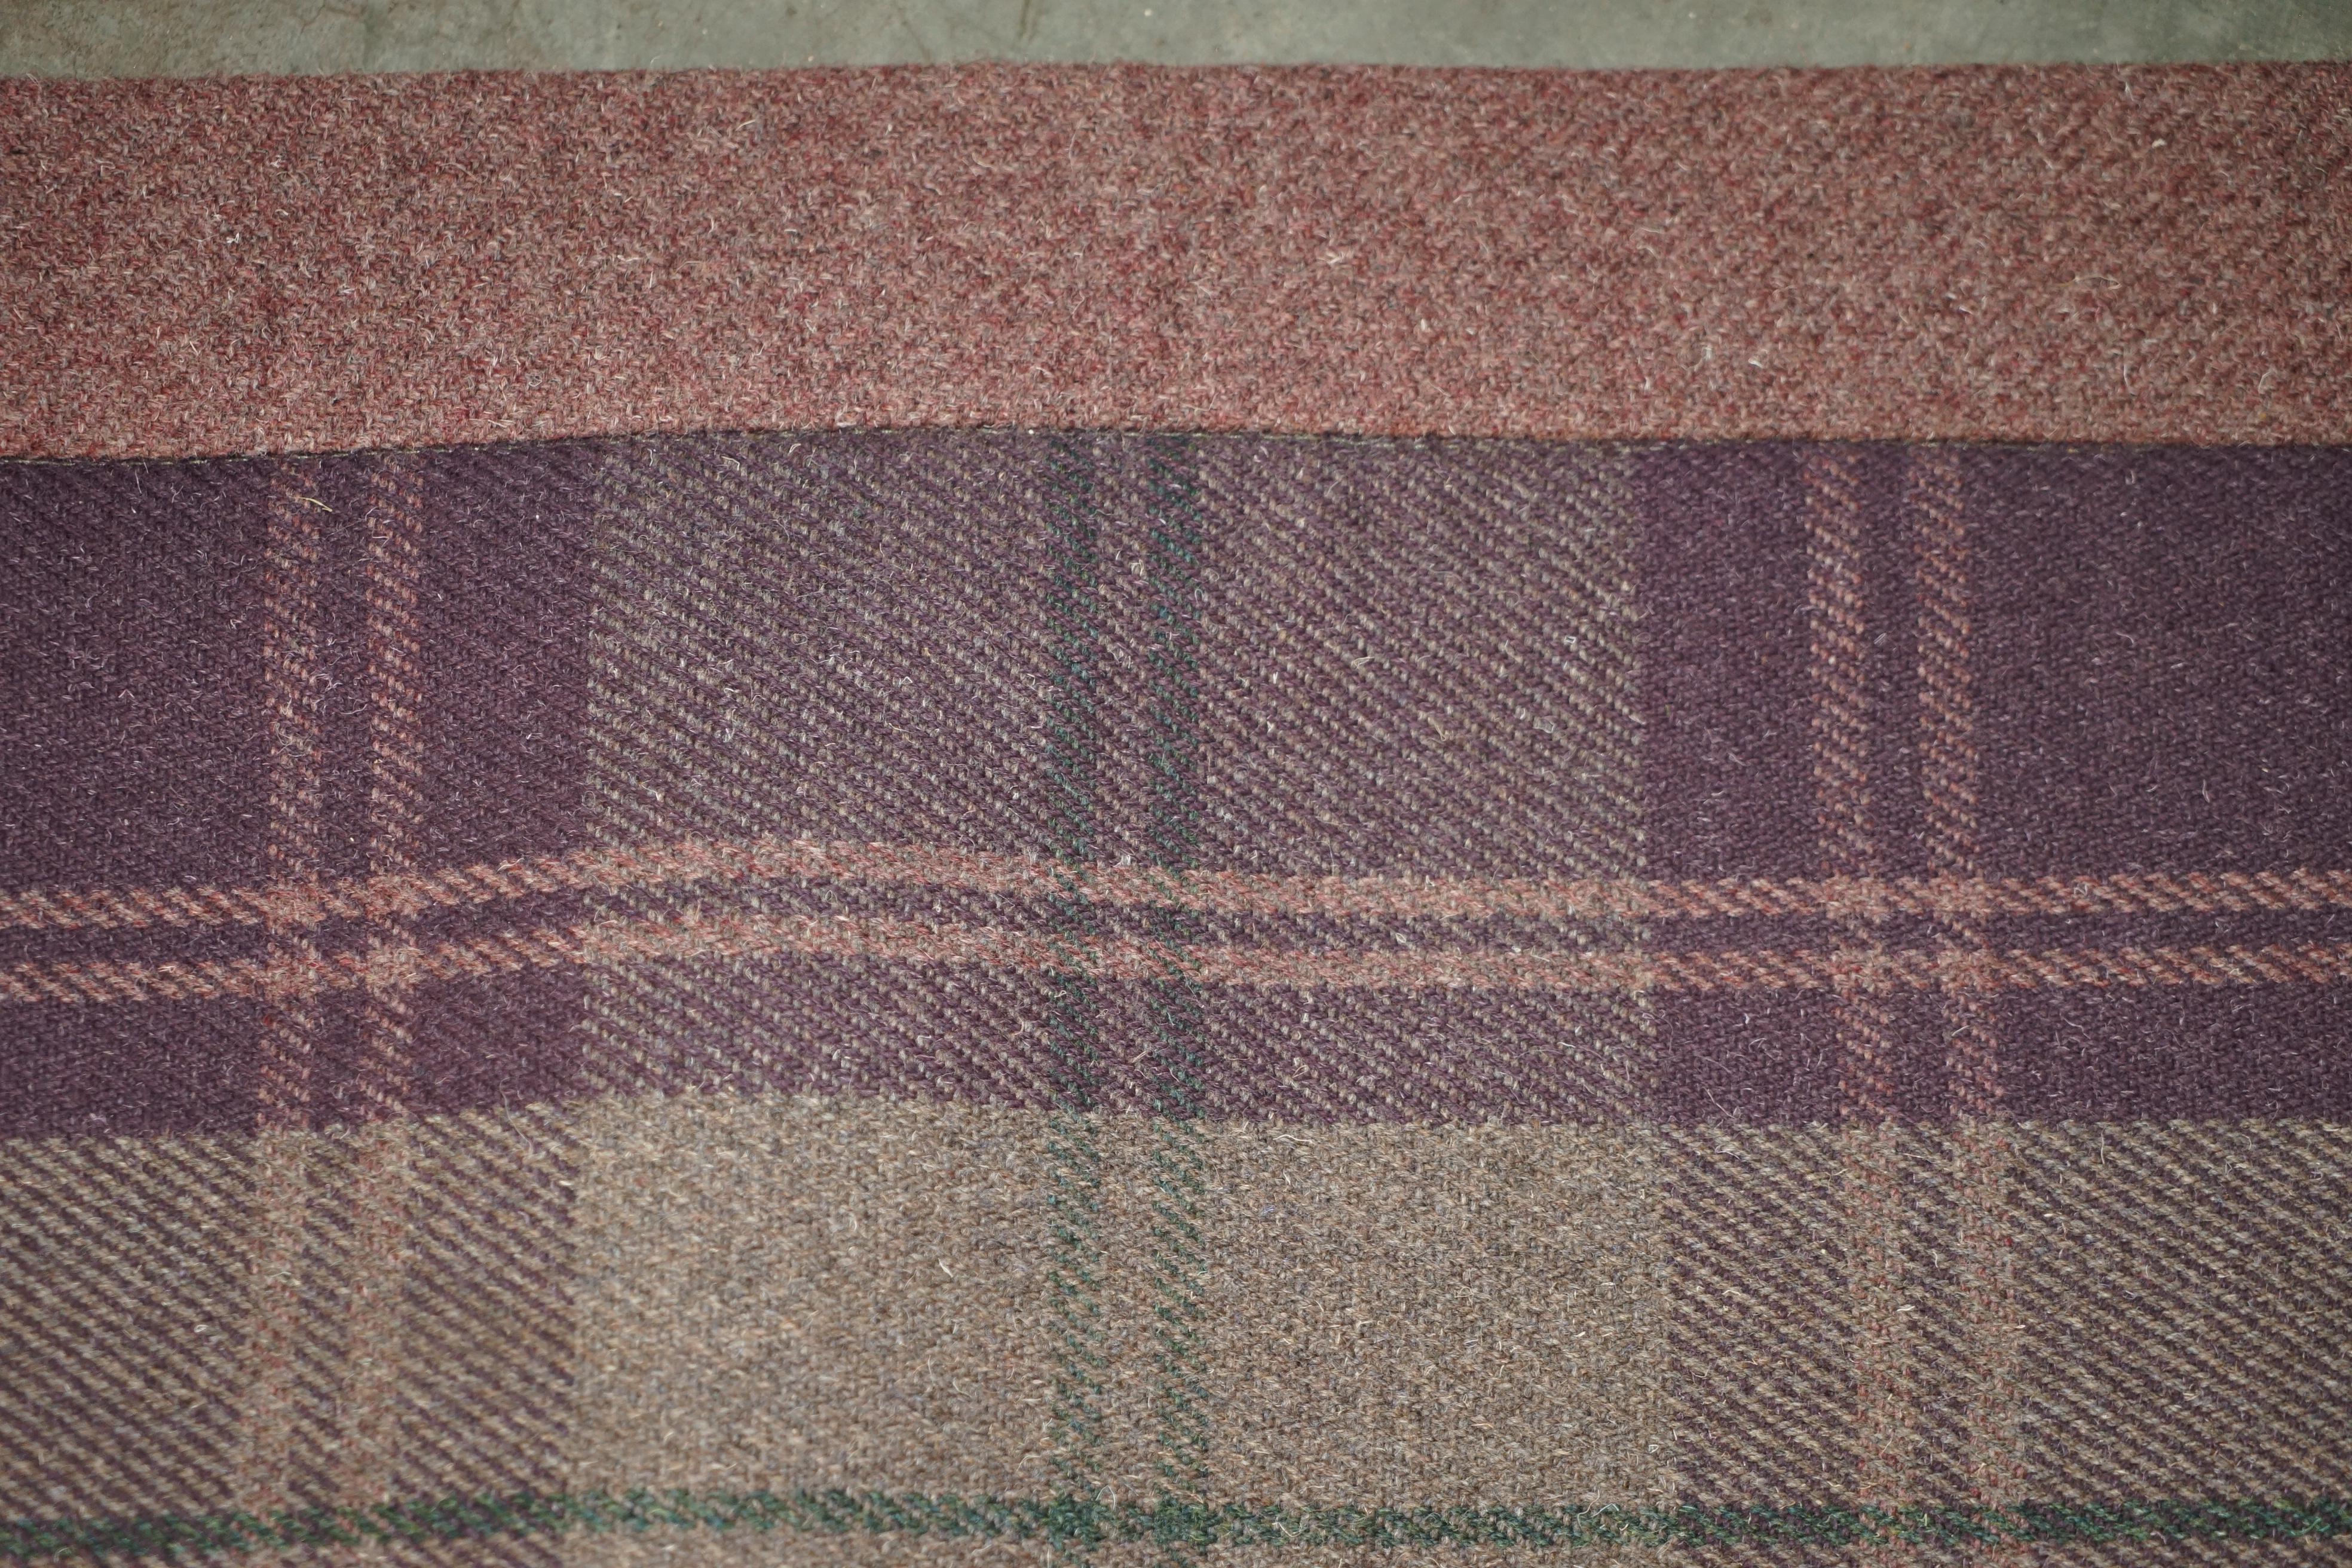 Wool HUGE 18.8 METER LONG RUNNER HALLWAY RUG CARPET FROM ANTA SCOTTiSH TARTAN CHECK For Sale